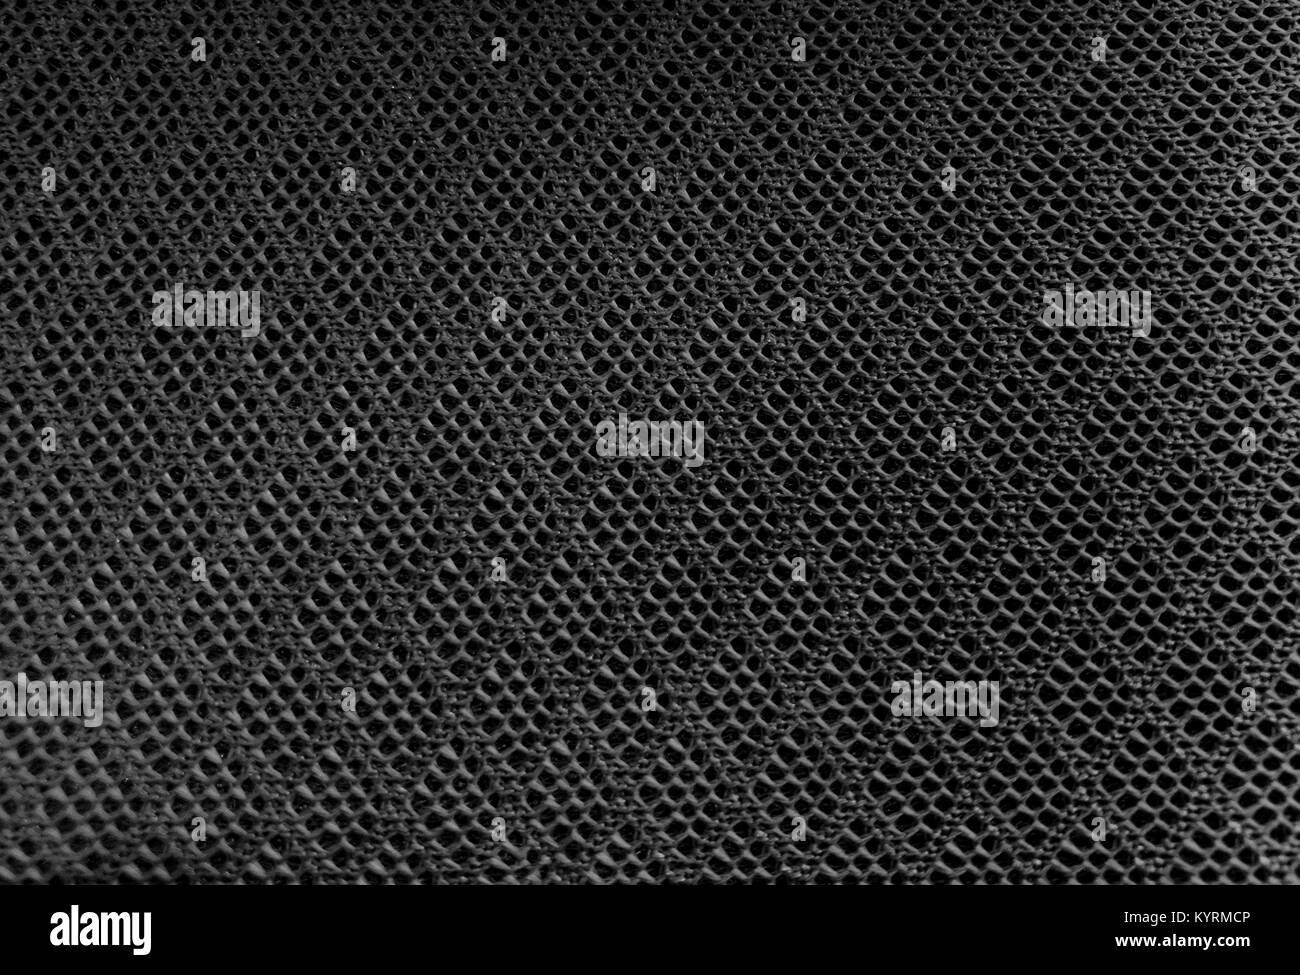 Black Polyester Hexagon Netting - Netting - Other Fabrics